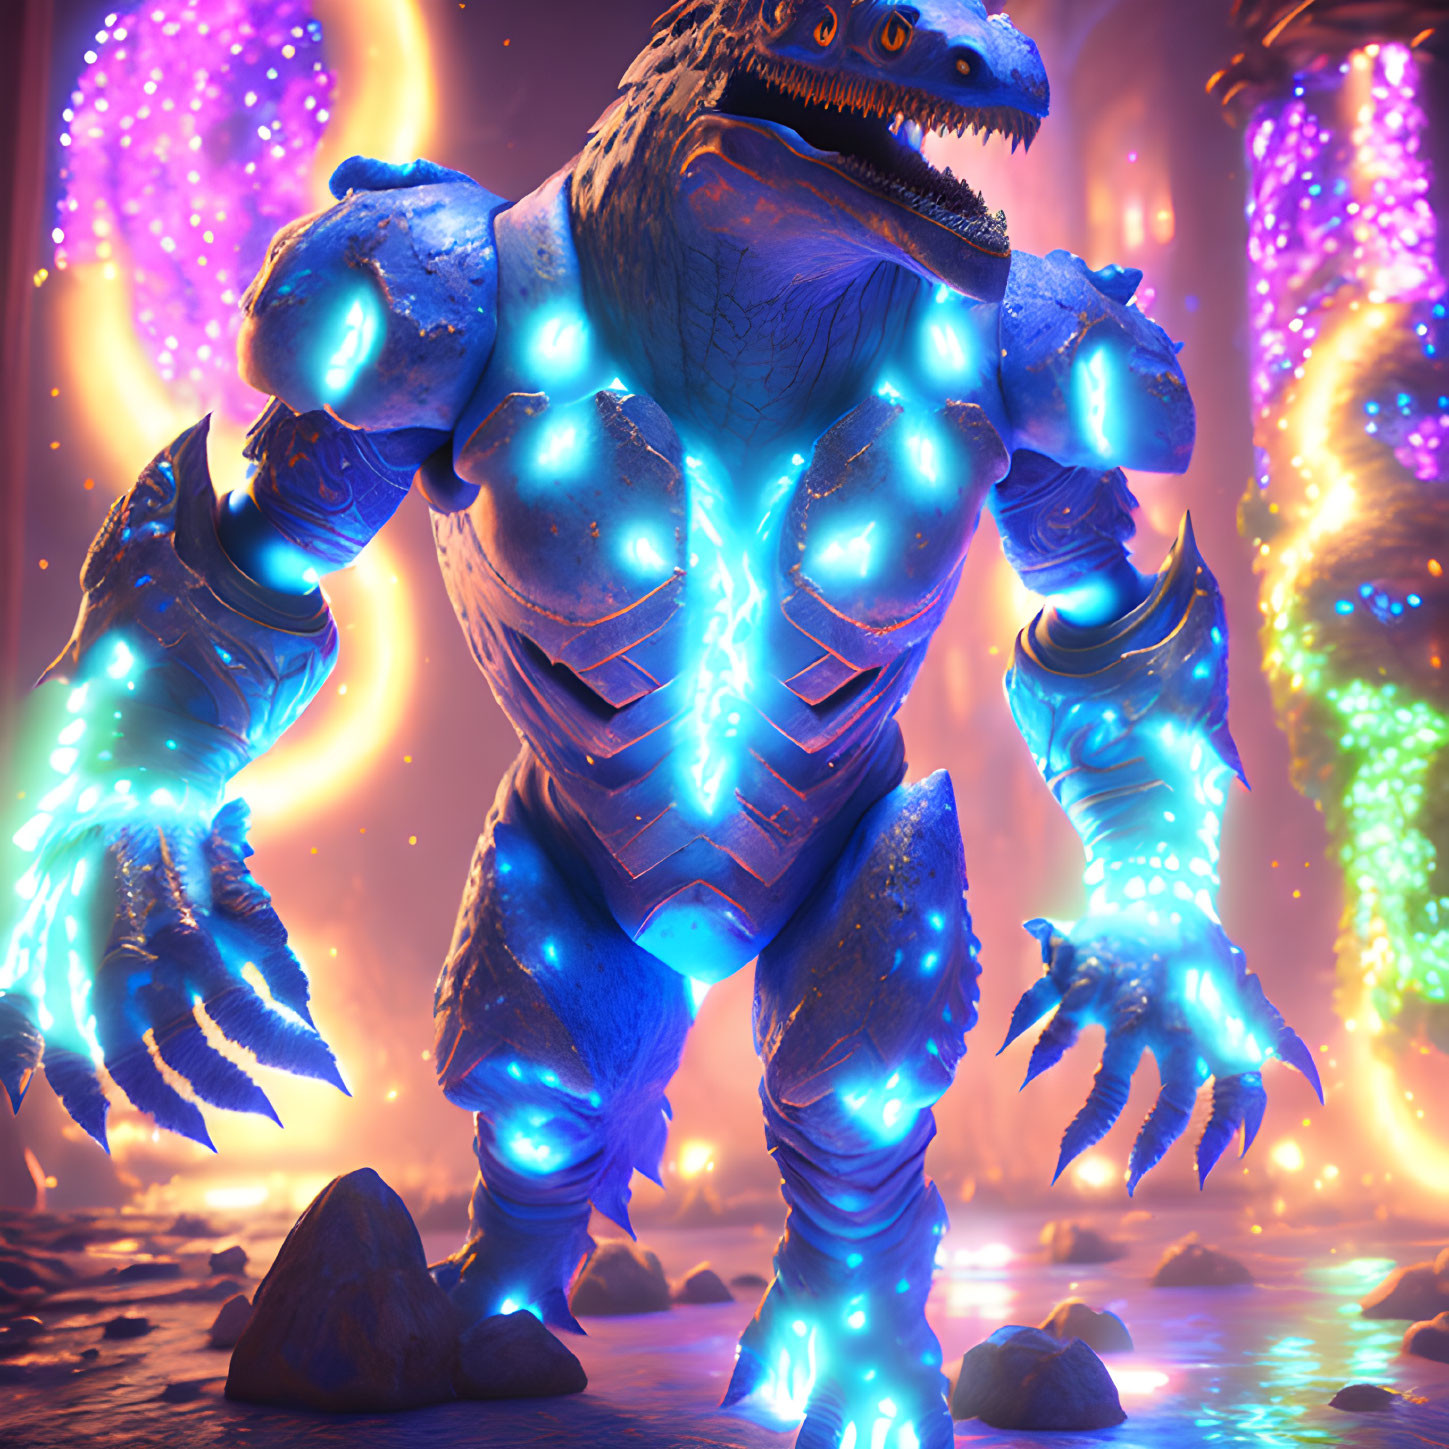 Armored beast radiating blue energy under alien sky